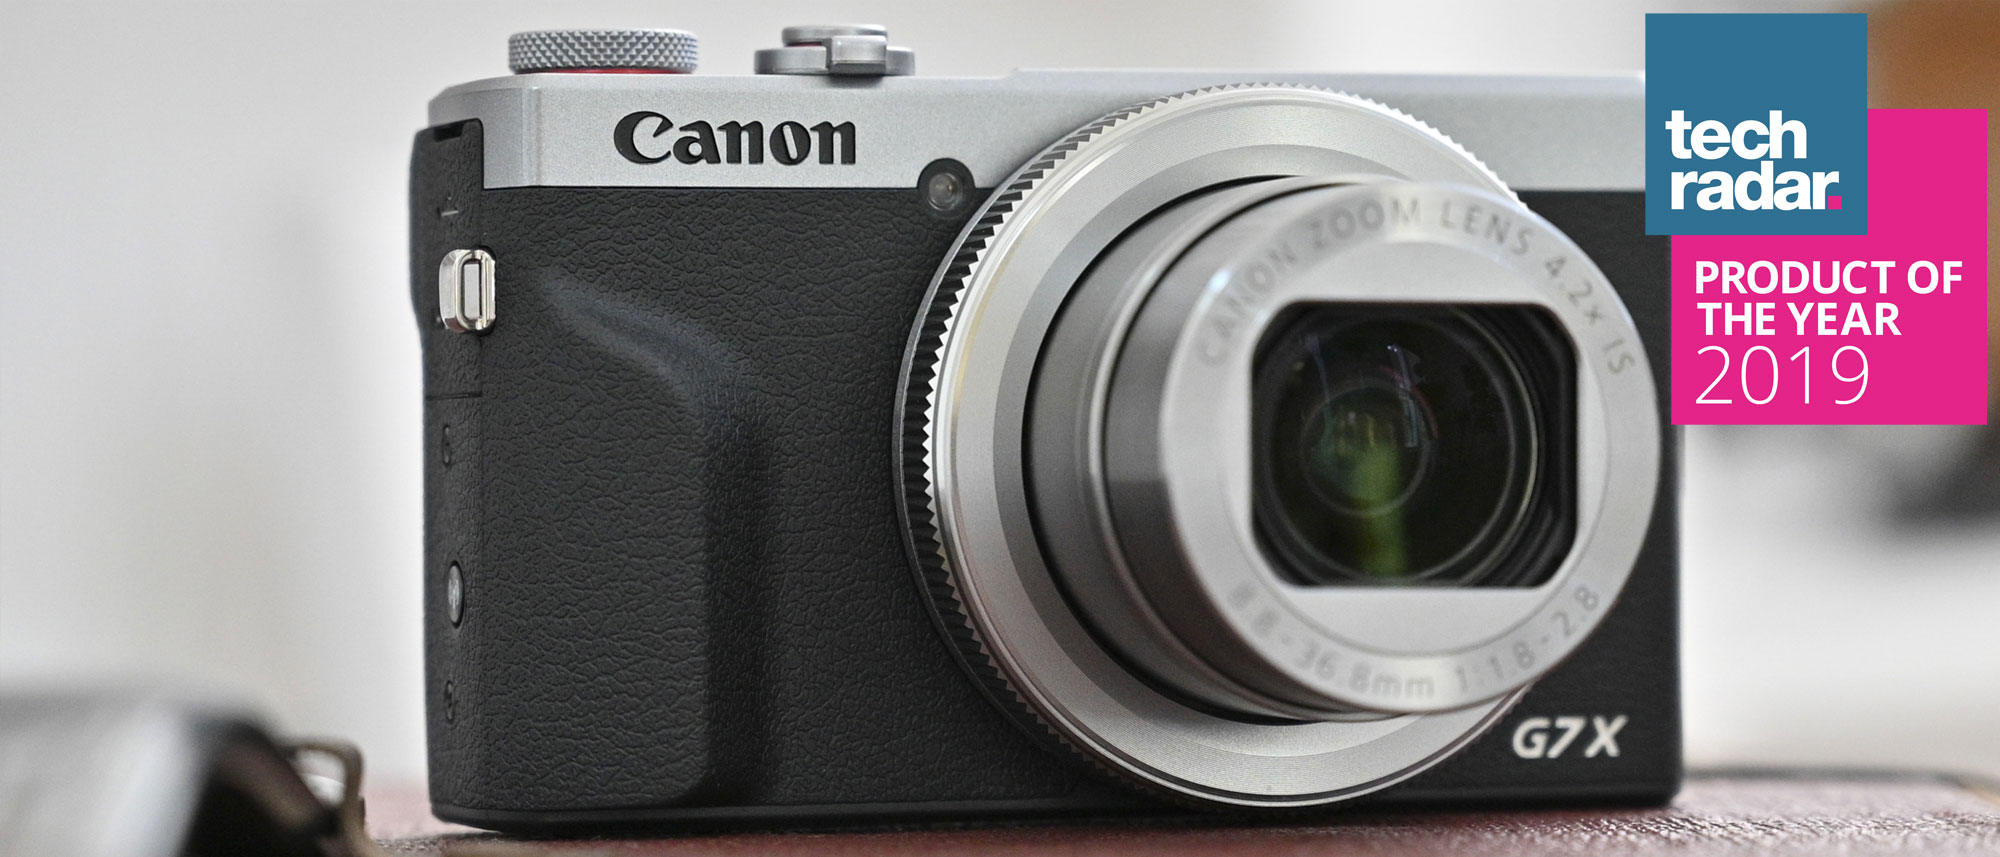 Canon Powershot G7 X Mark Iii Review Techradar